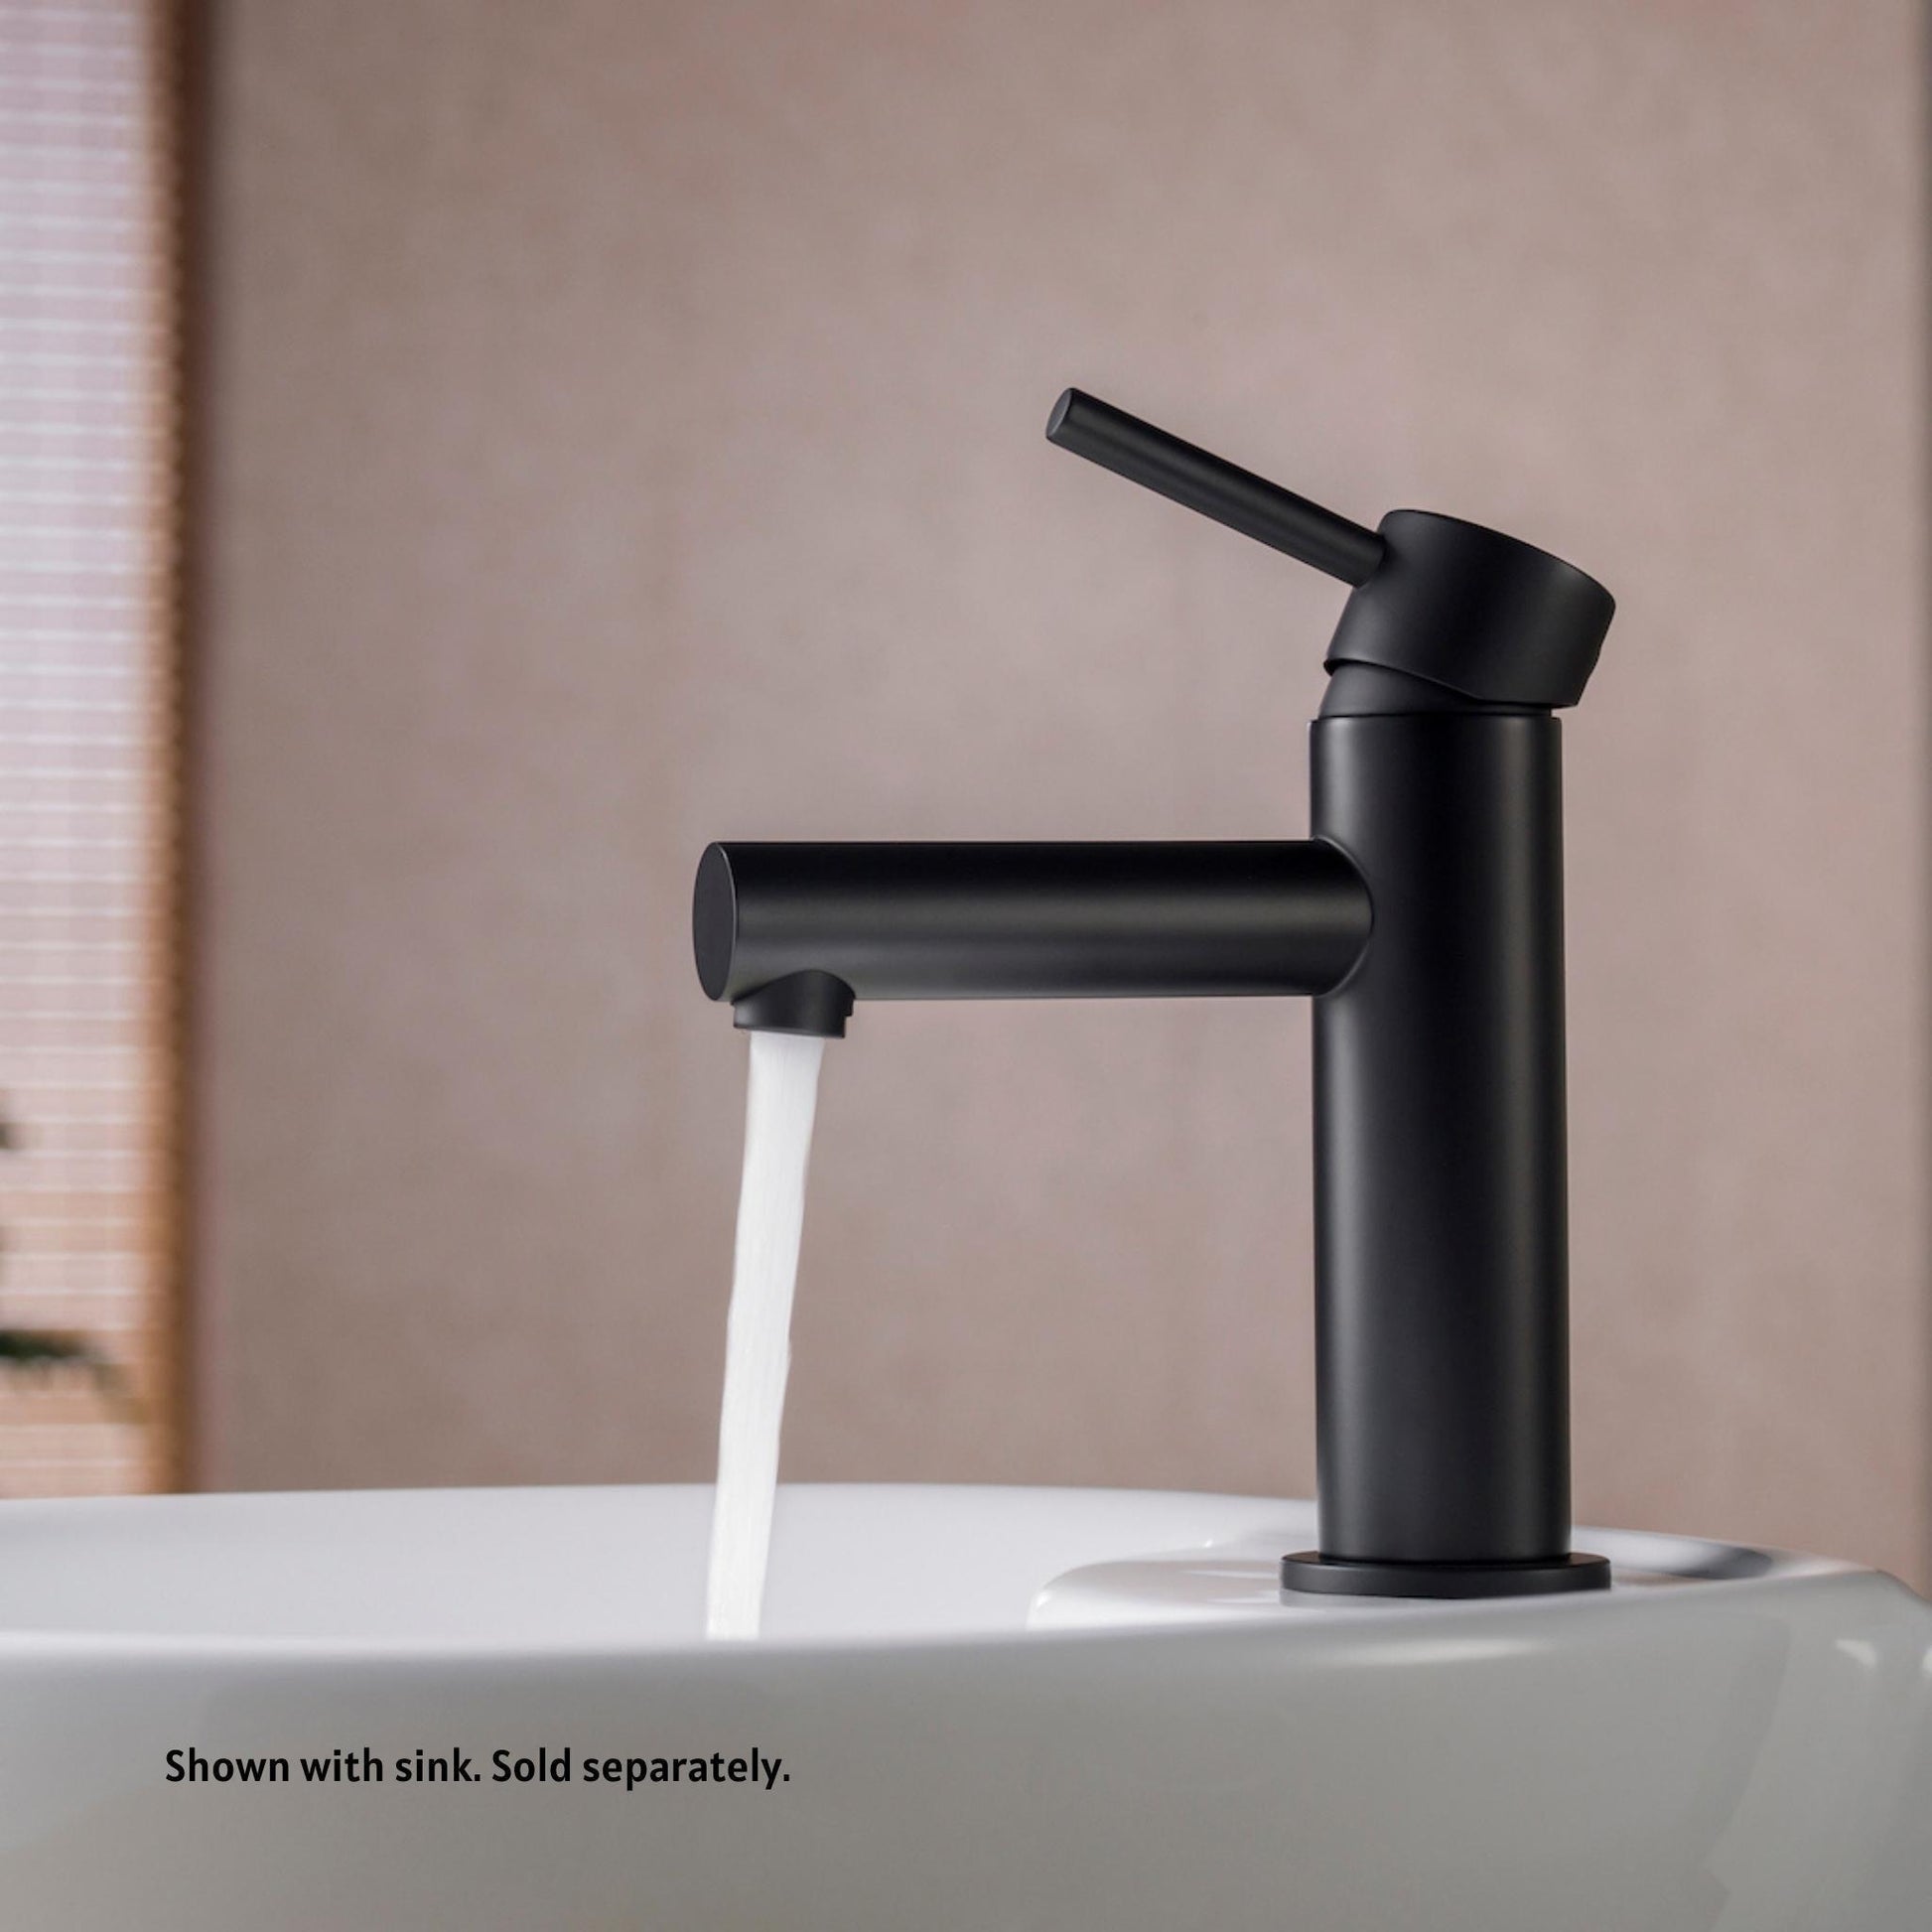 Blossom F01 116 4" x 7" Matte Black Lever Handle Bathroom Sink Single Hole Faucet